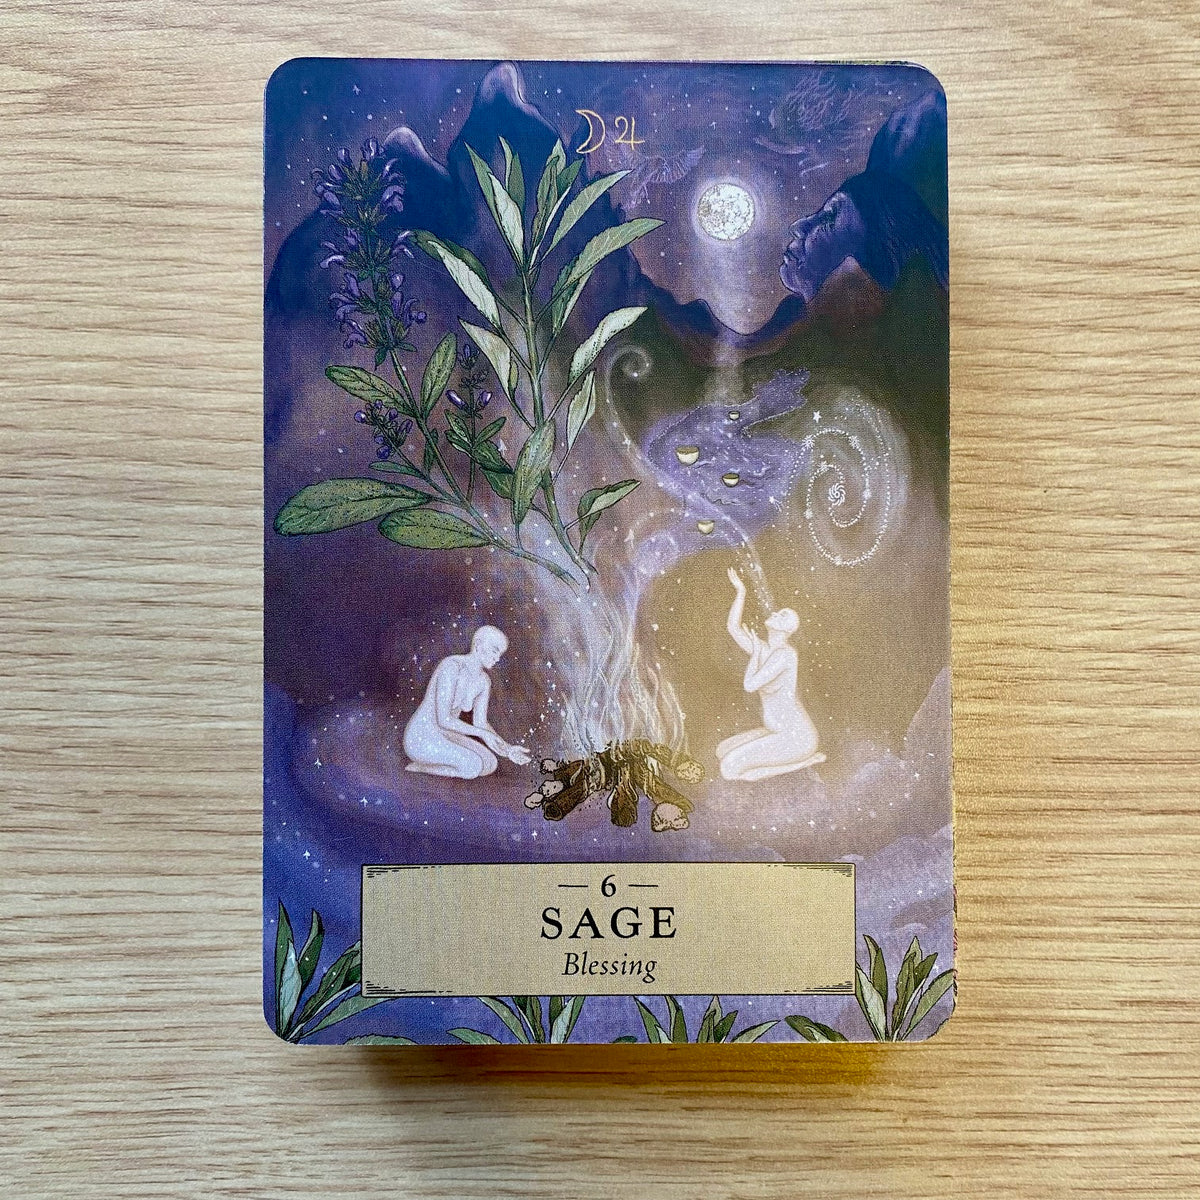 Herbal Astrology Oracle. "Sage" card representing Blessing